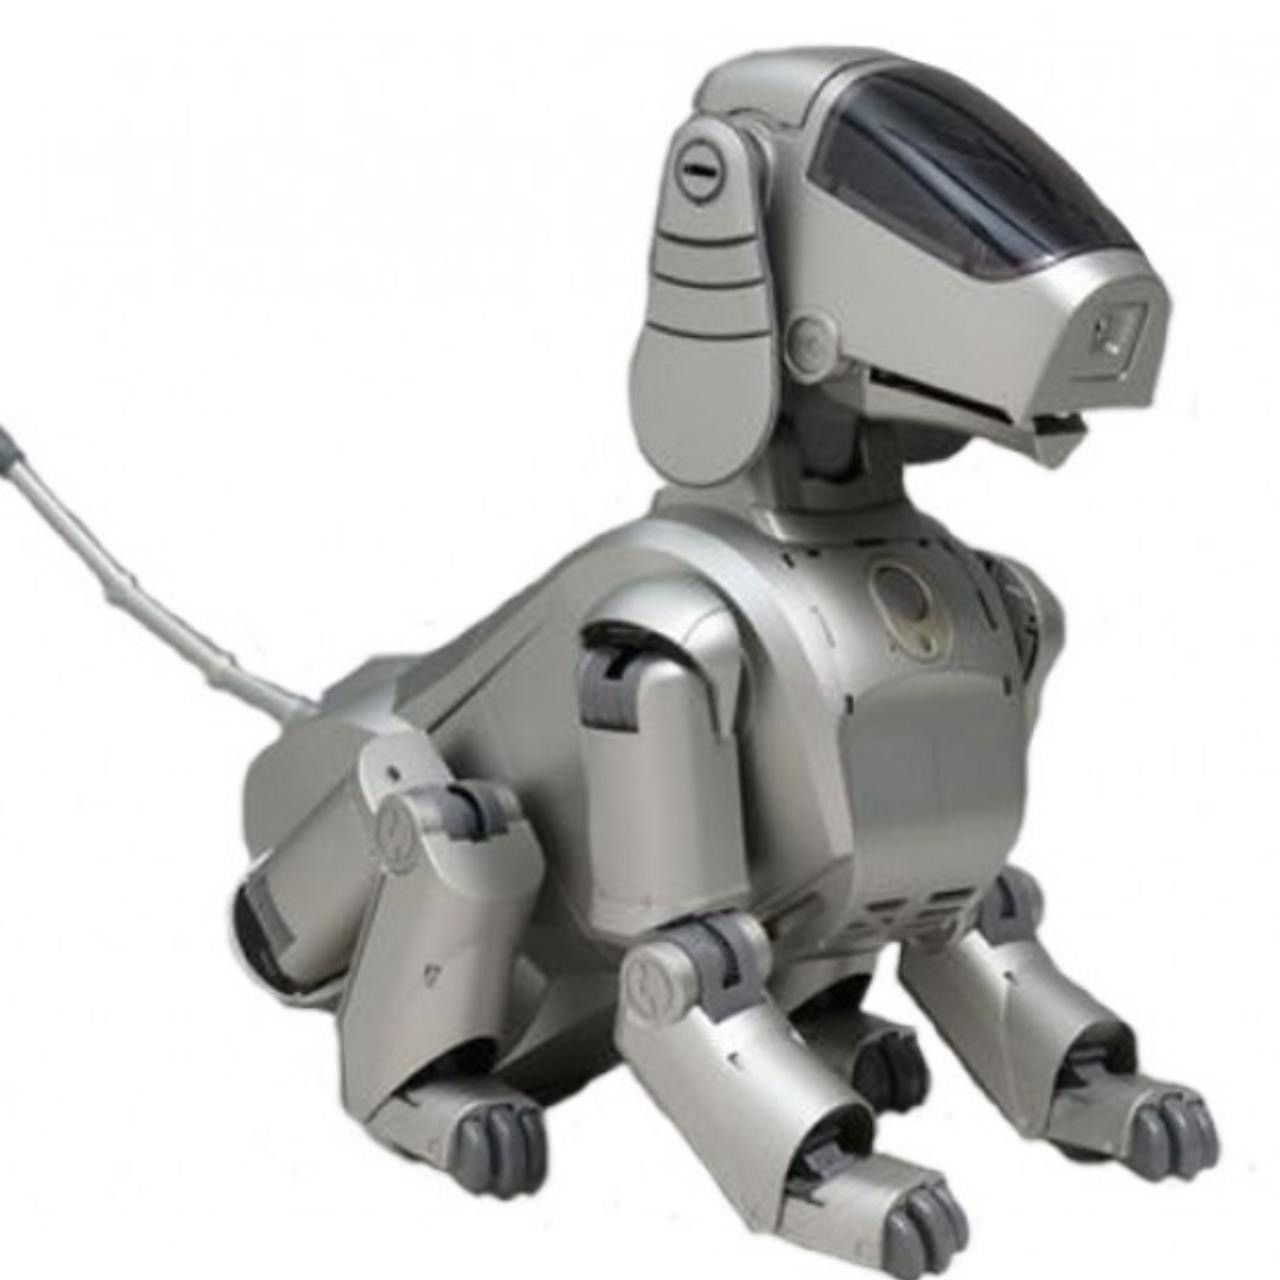 Vintage Sony Aibo 90s Robot Dog Toy Vintage Promo Japan T-Shirt Size US M / EU 48-50 / 2 - 4 Preview